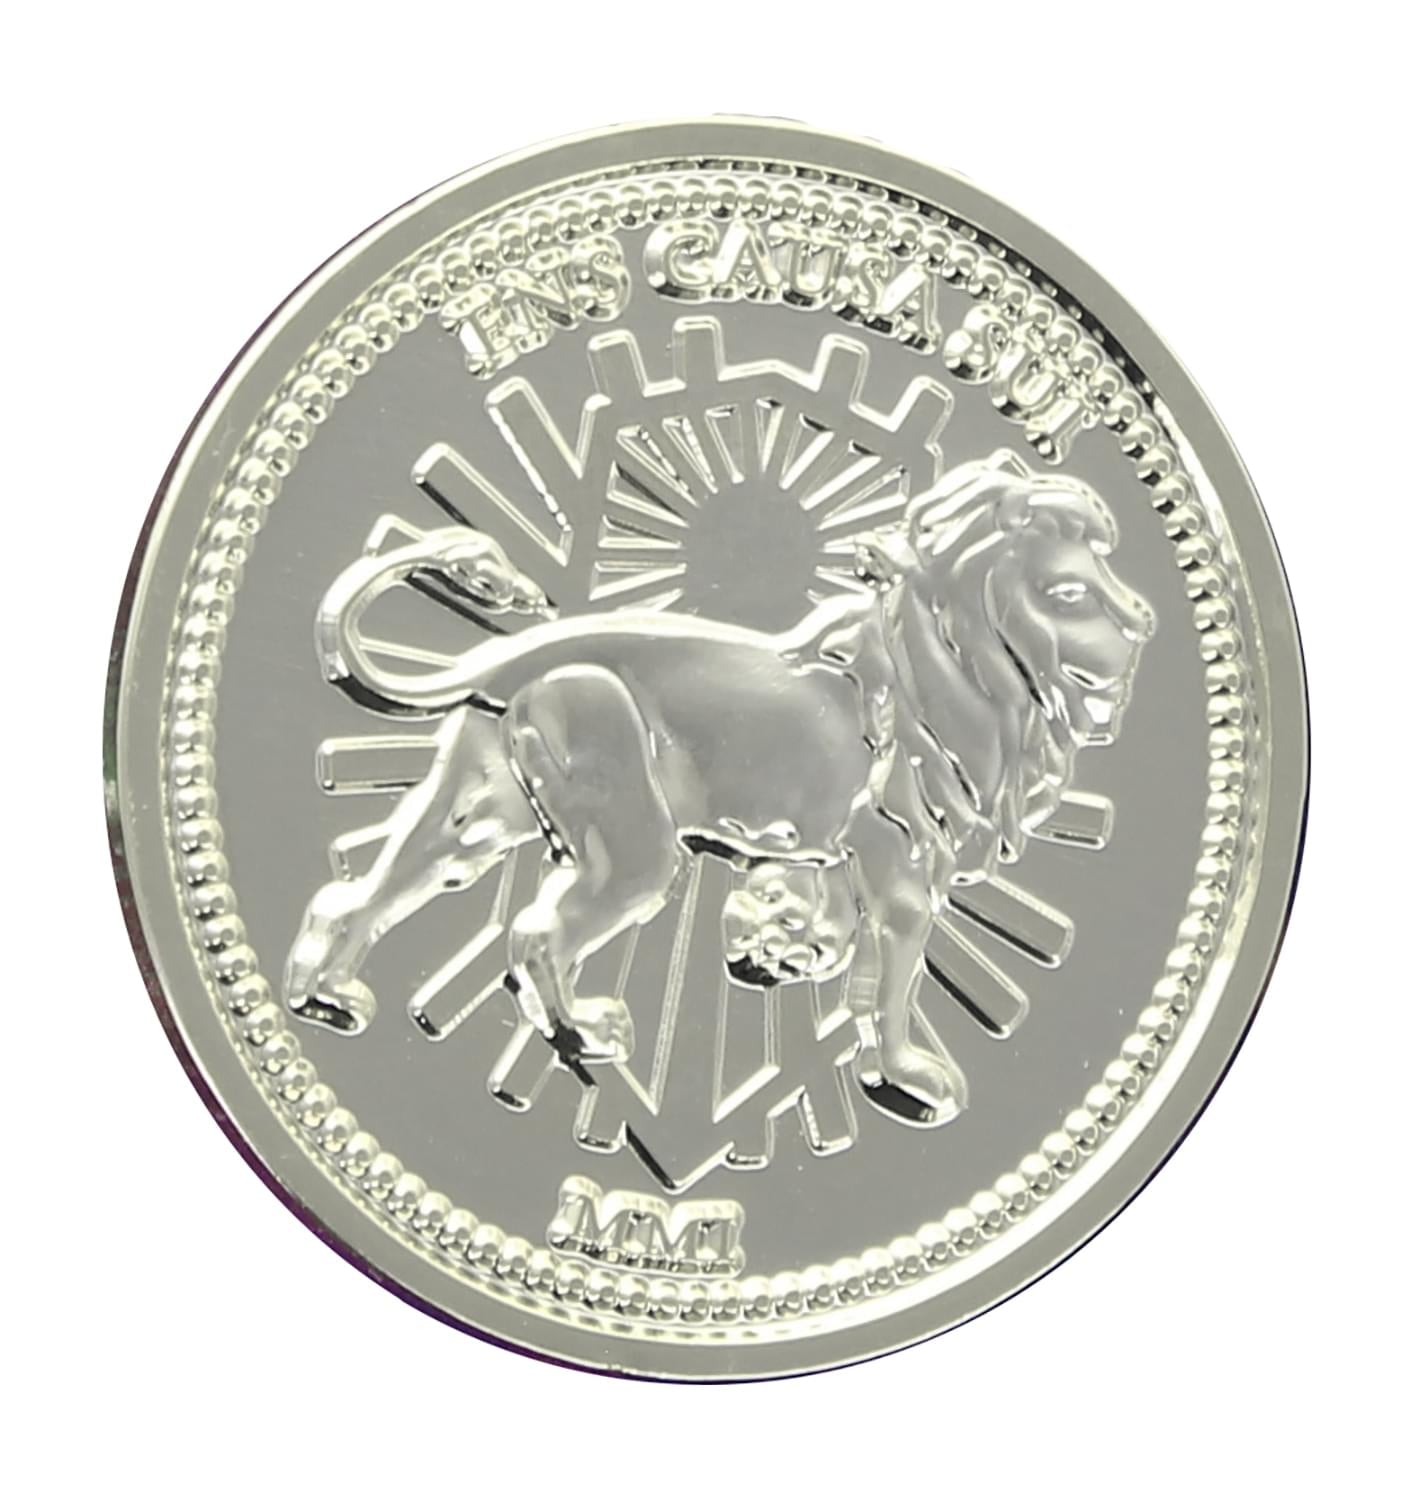 John Wick Continental Coin (Ens Causa Sui) Die-Cast Pin Replica